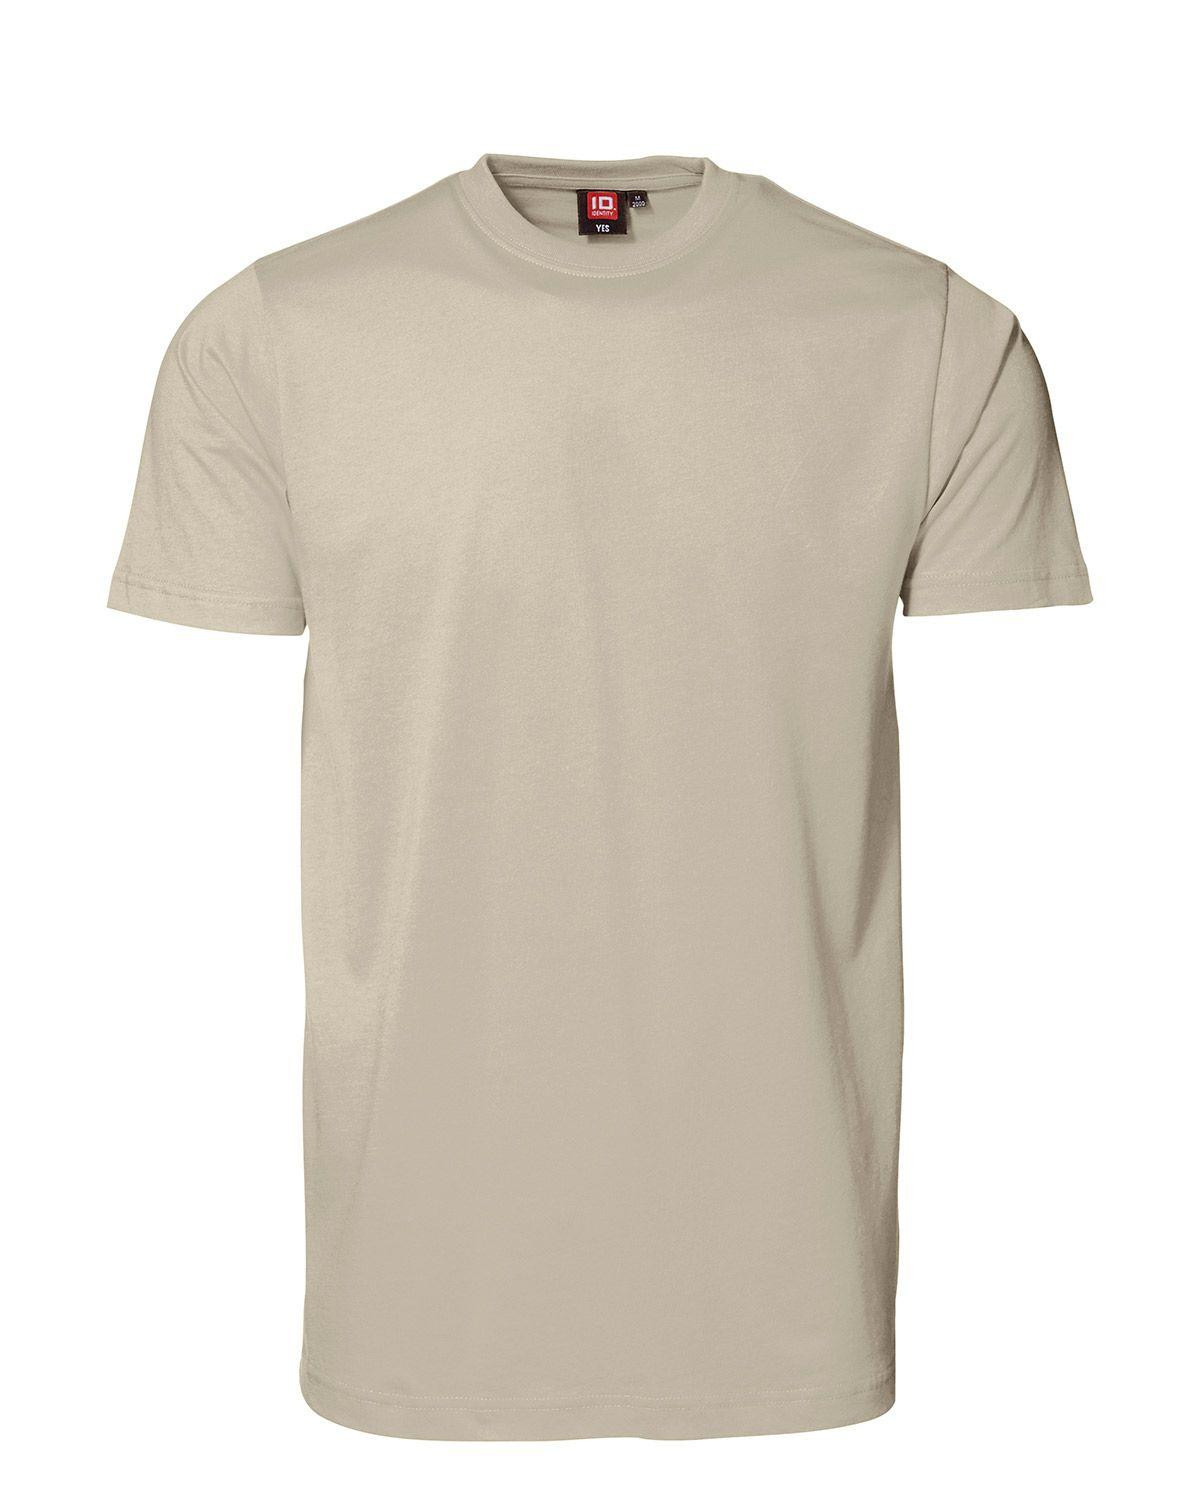 ID YES T-shirt (Khaki, 3XL)